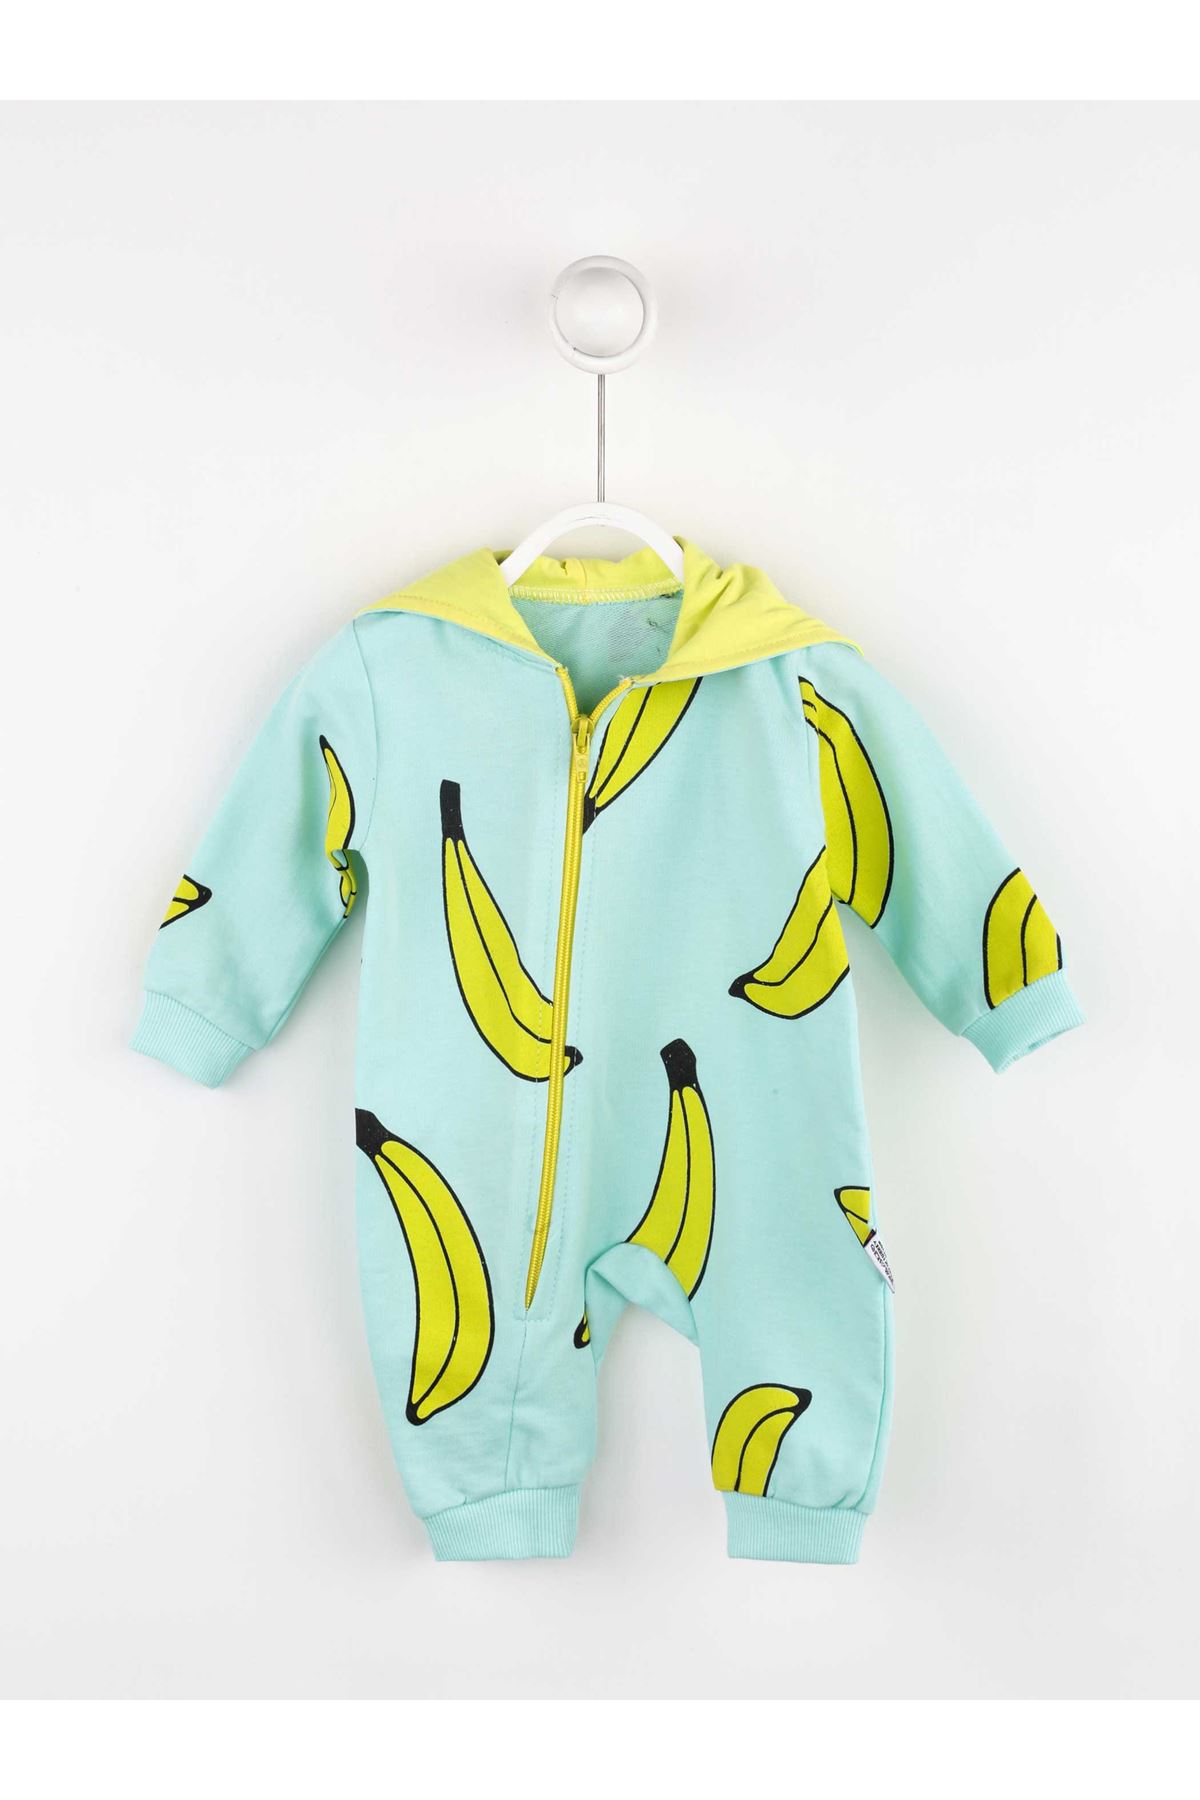 Green banana print baby girl overalls cotton seasonal fashion overalls babies models